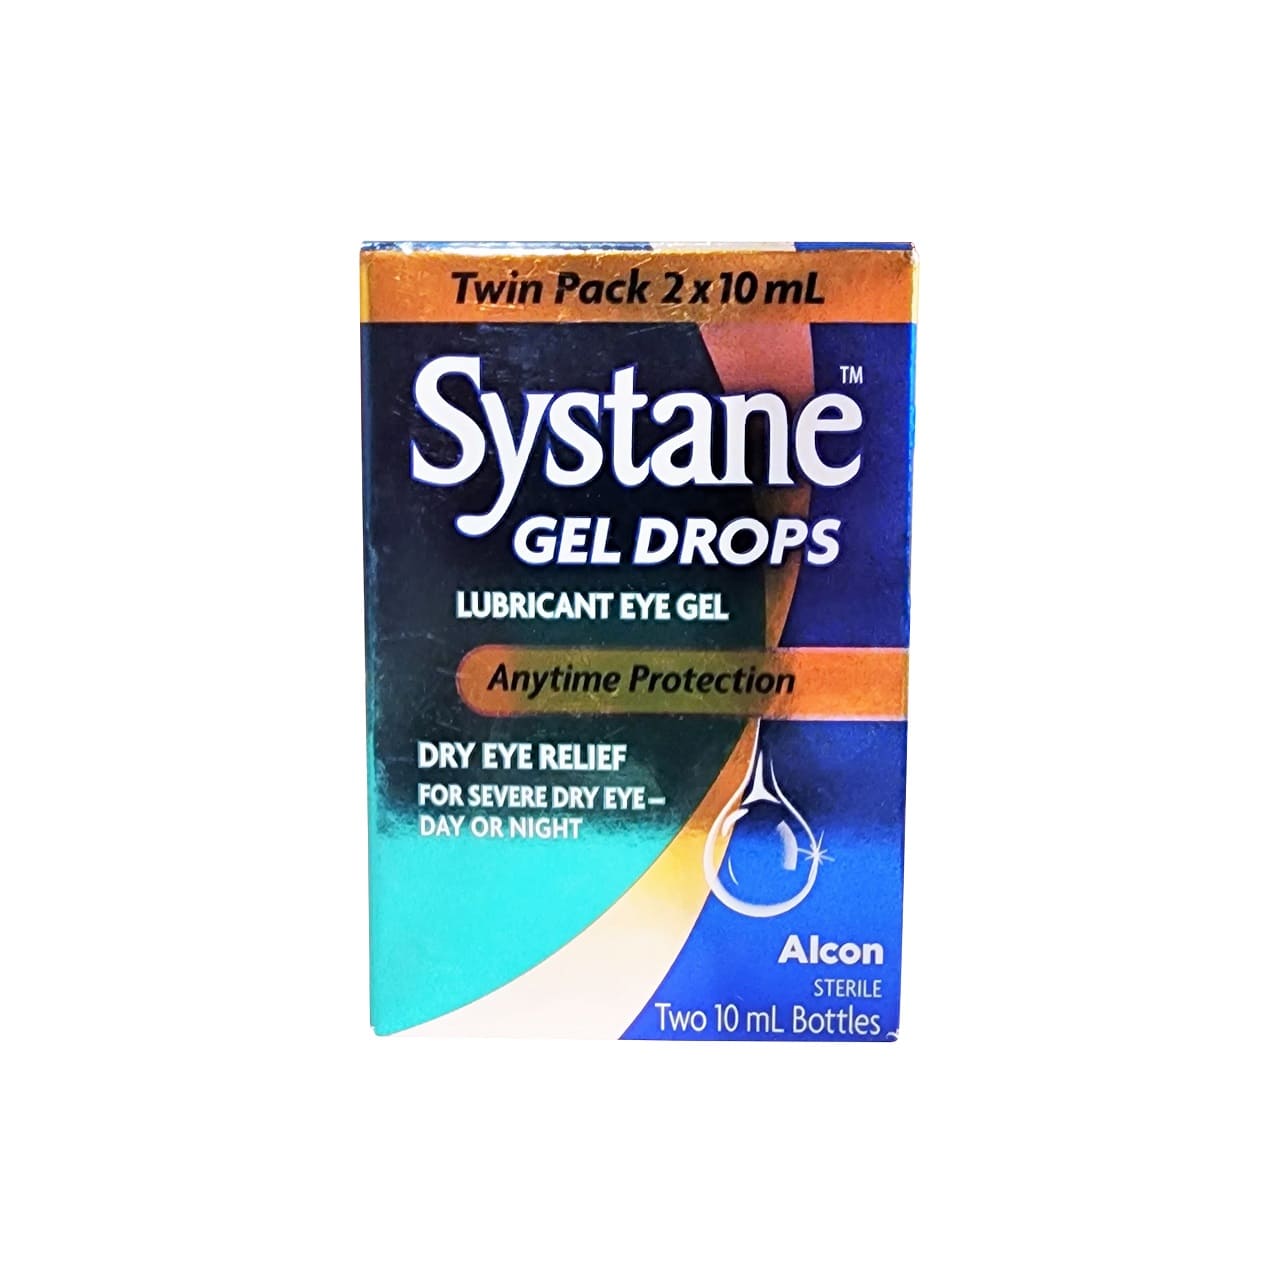 Product label for Alcon Systane Gel Drops Lubricant Eye Gel (2 x 10 mL) in English